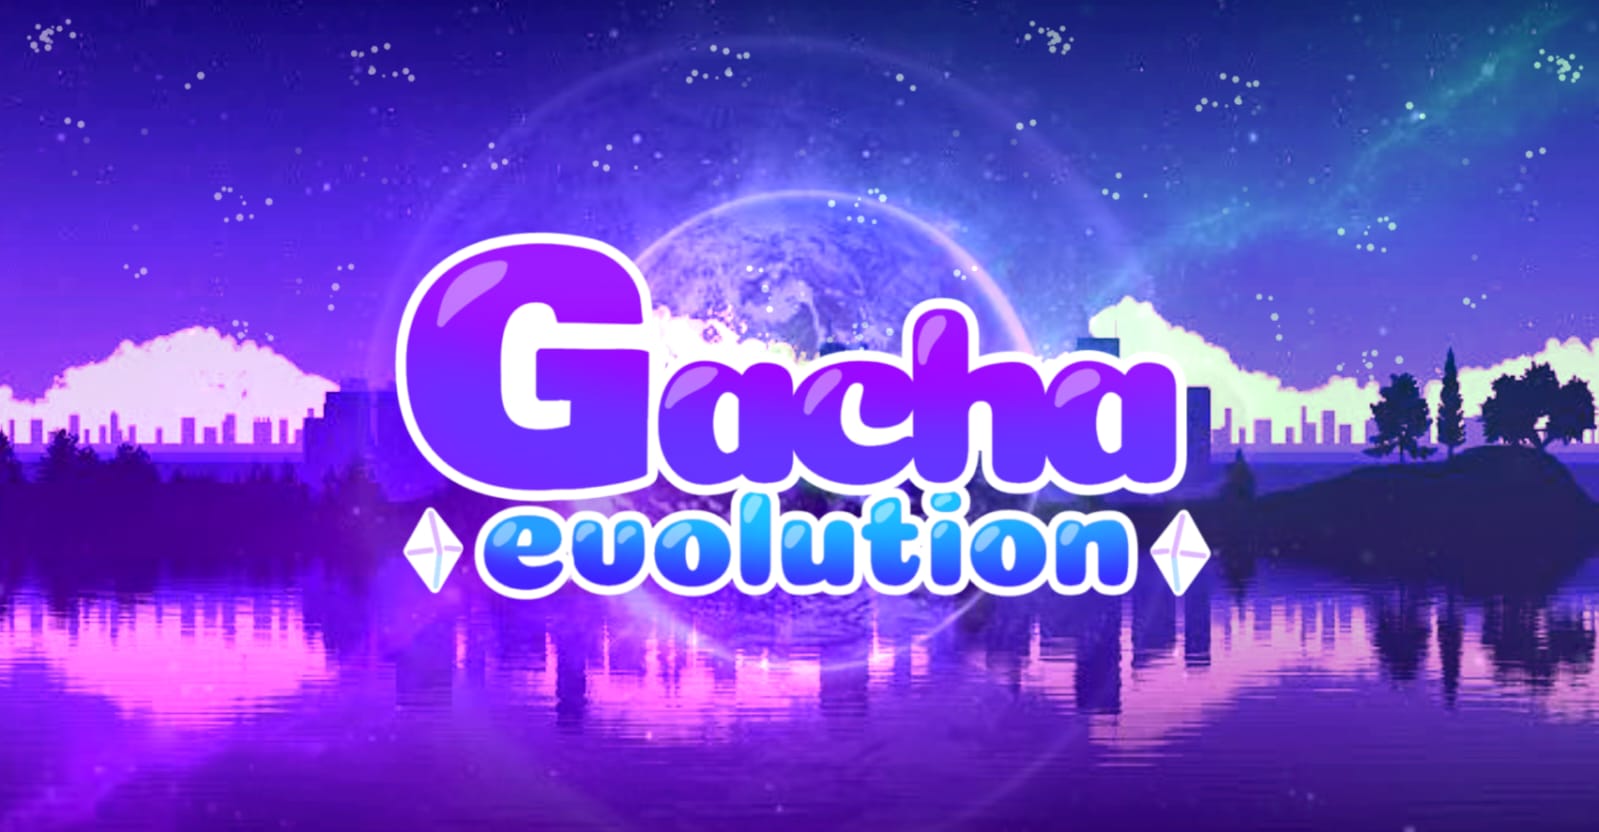 Gacha Evolution by Mishy Go!